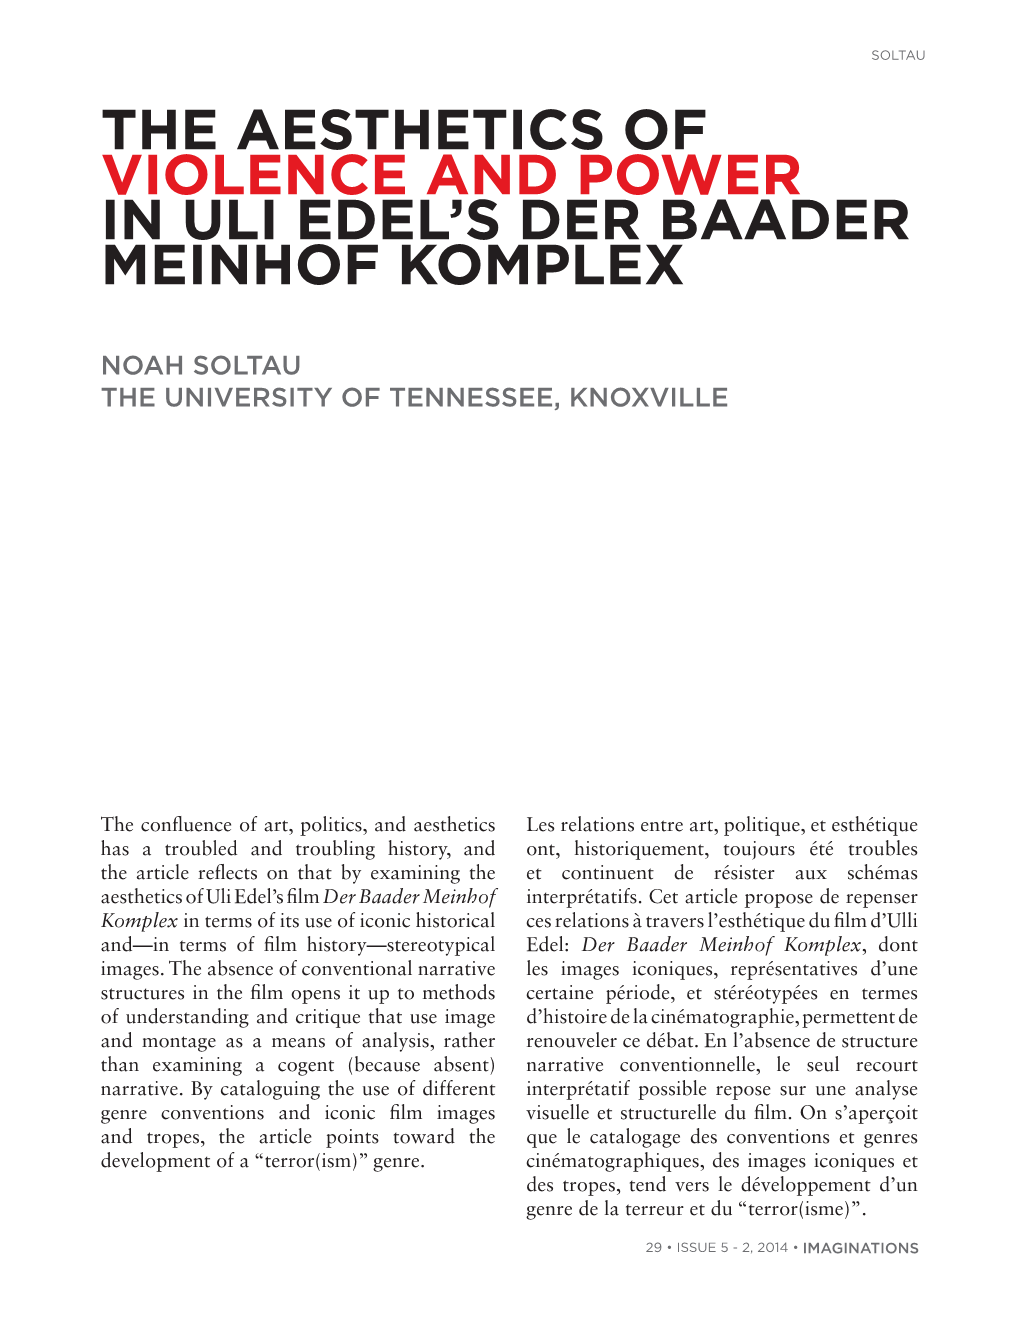 The Aesthetics of Violence and Power in Uli Edel's Der Baader Meinhof Komplex